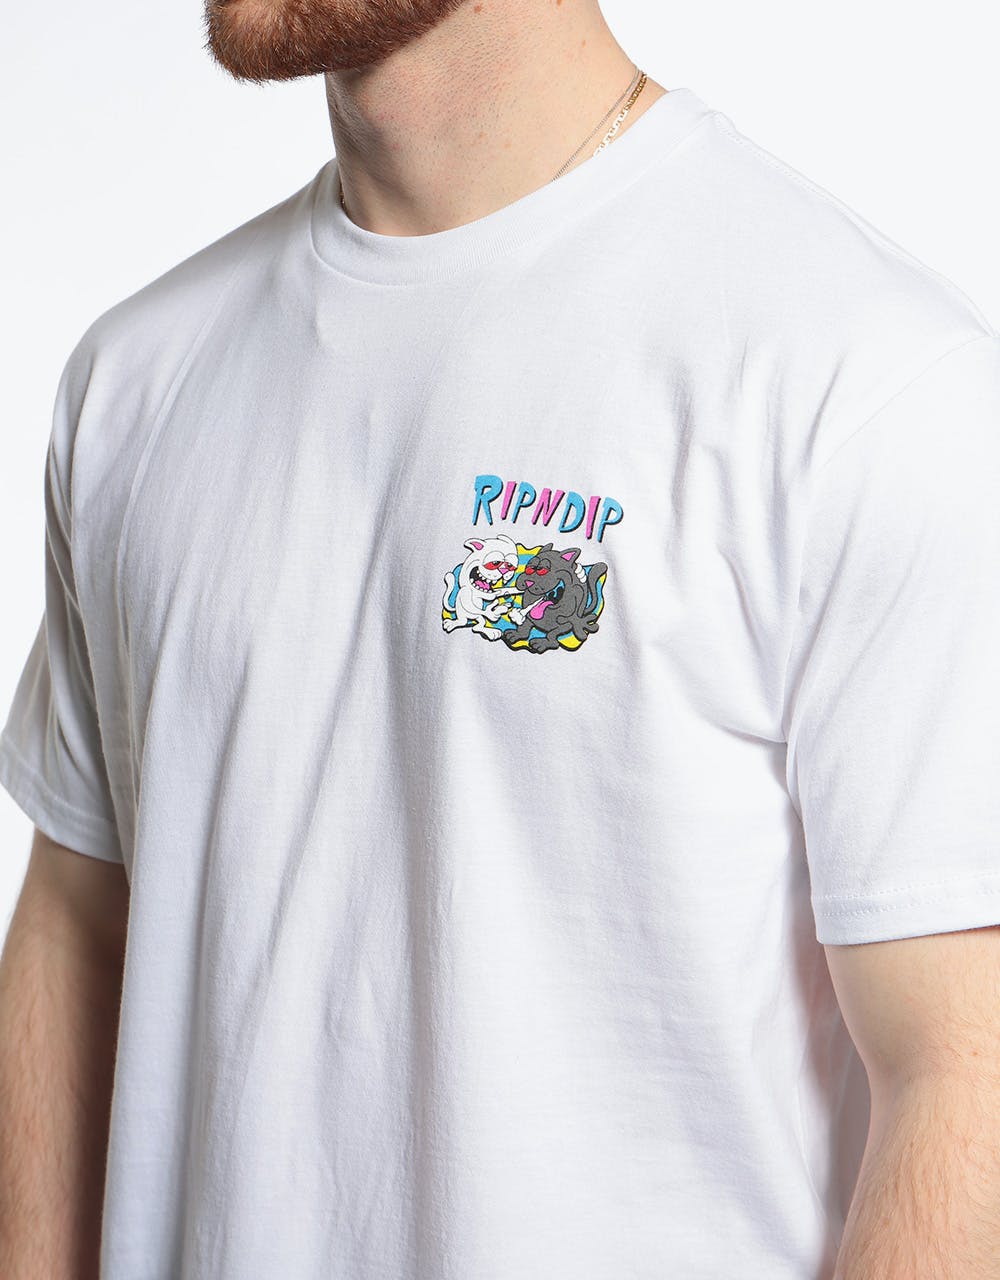 RIPNDIP Hash Bros T-Shirt - White